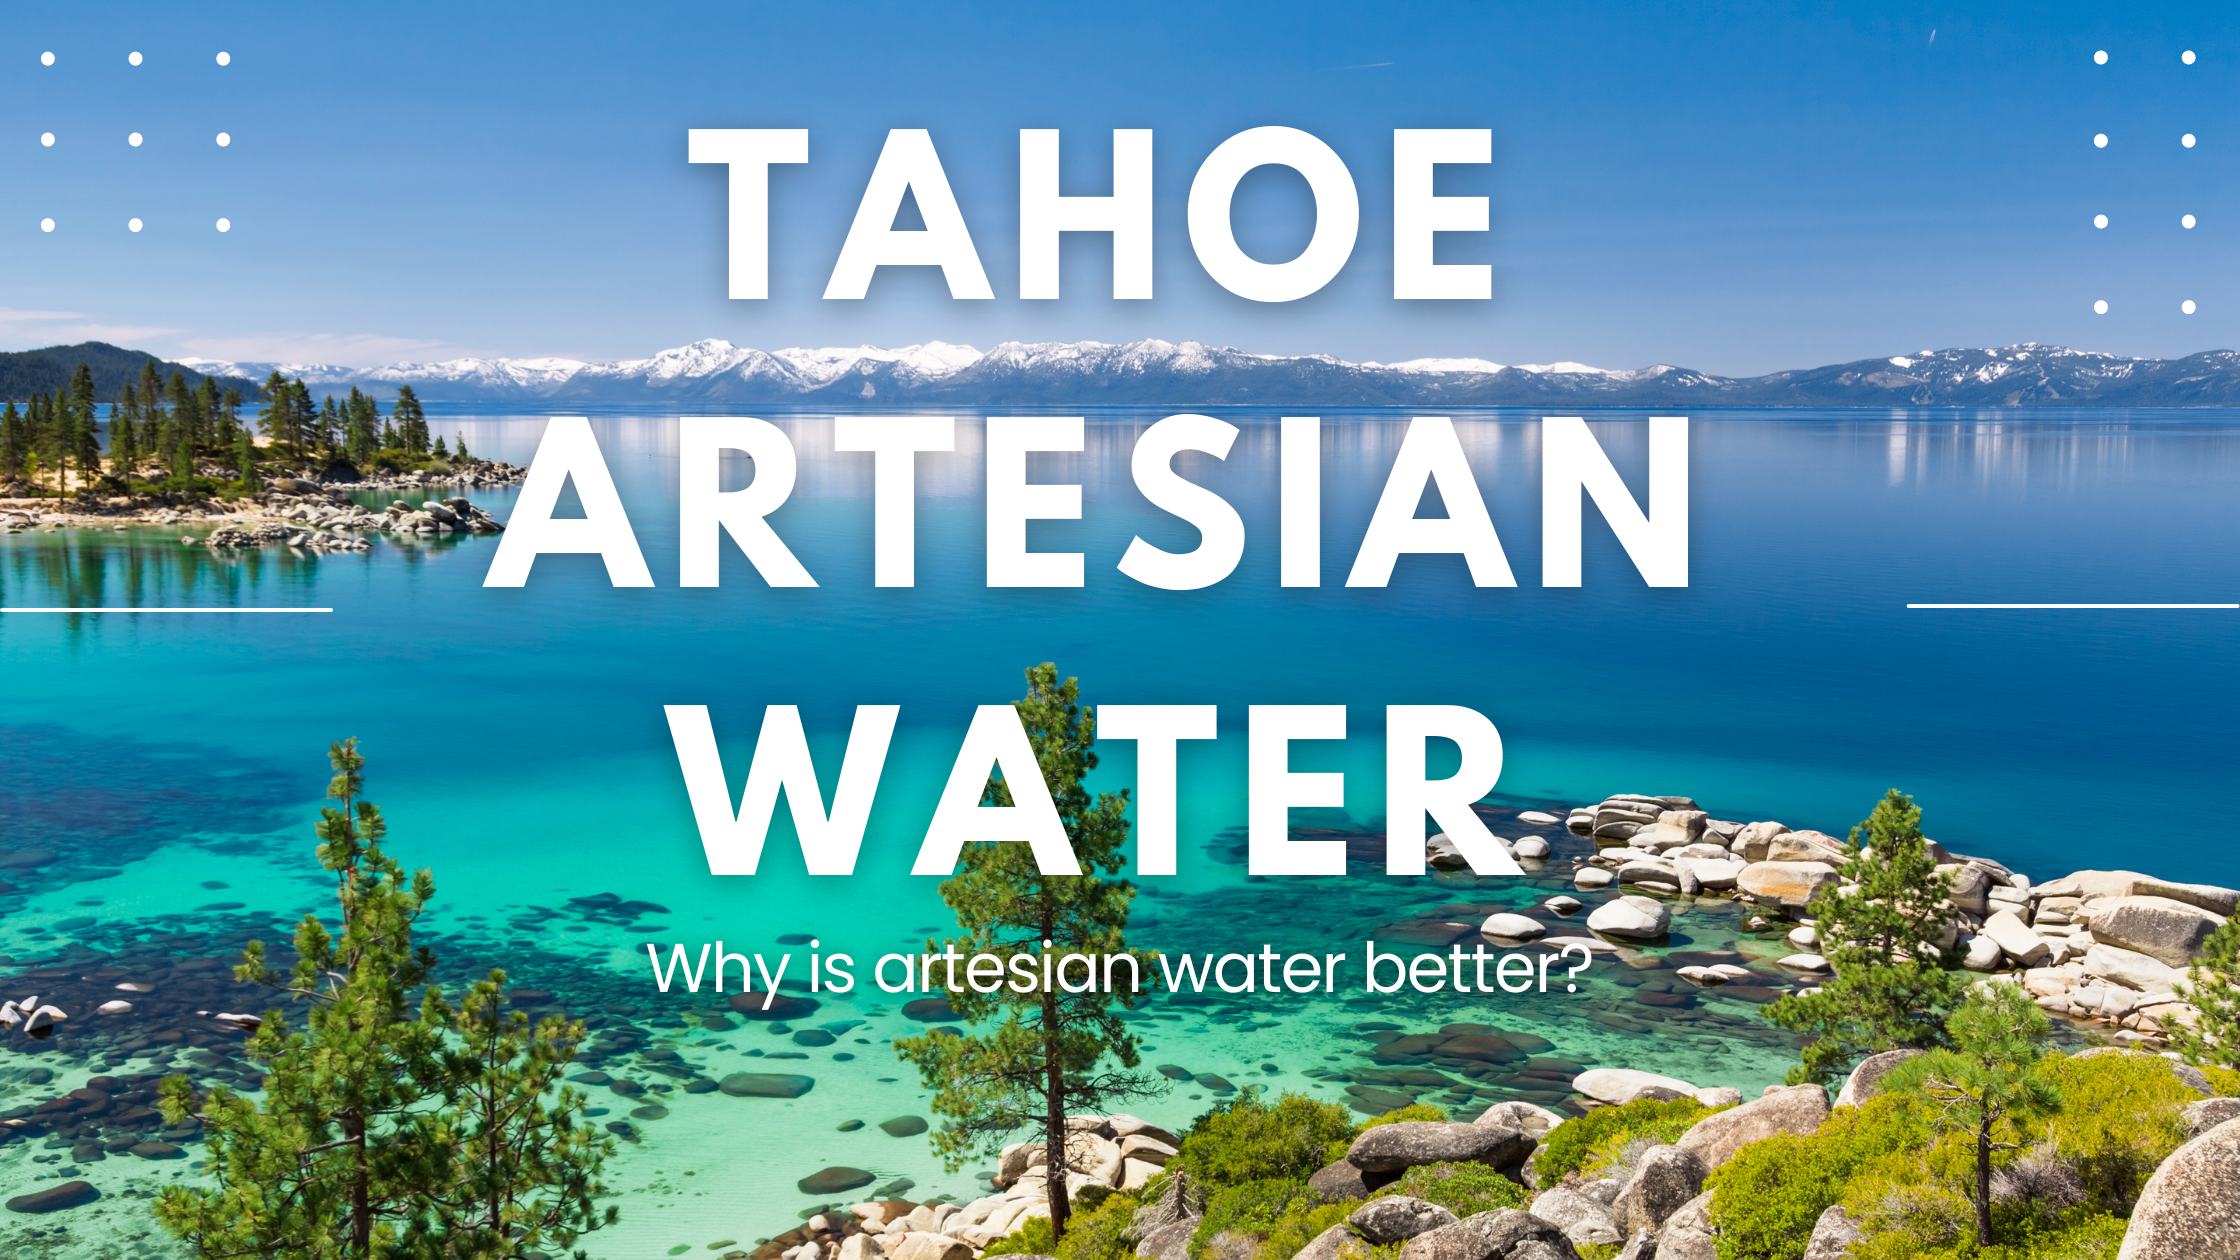 Tahoe Artesian Water